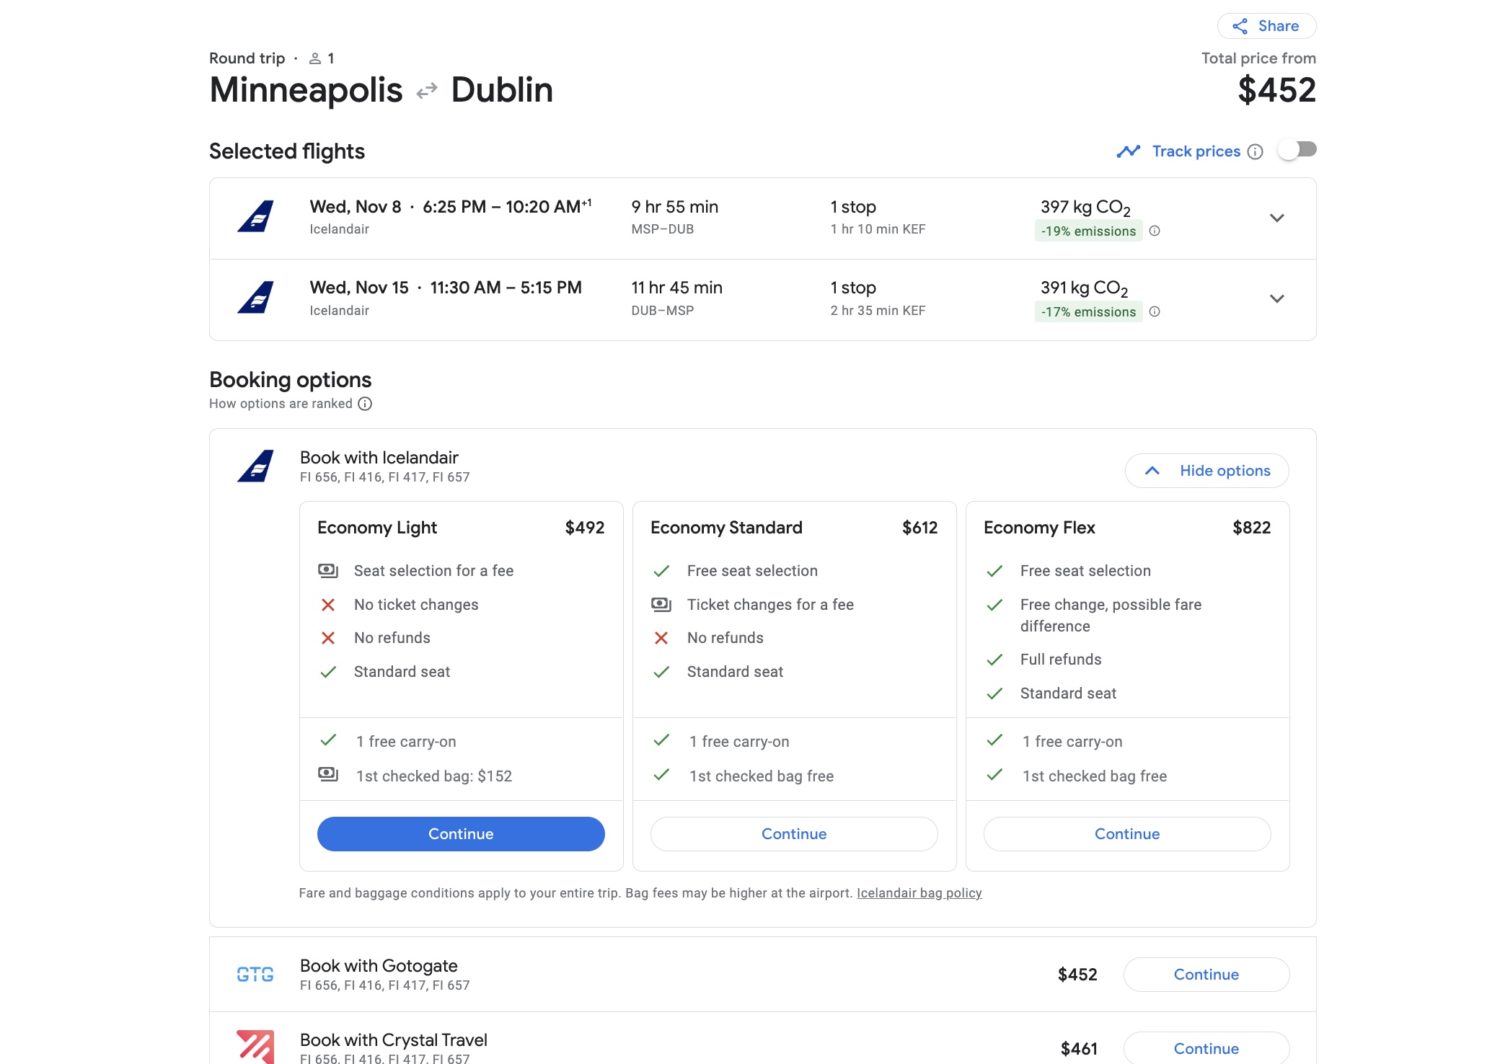 google flights pricing